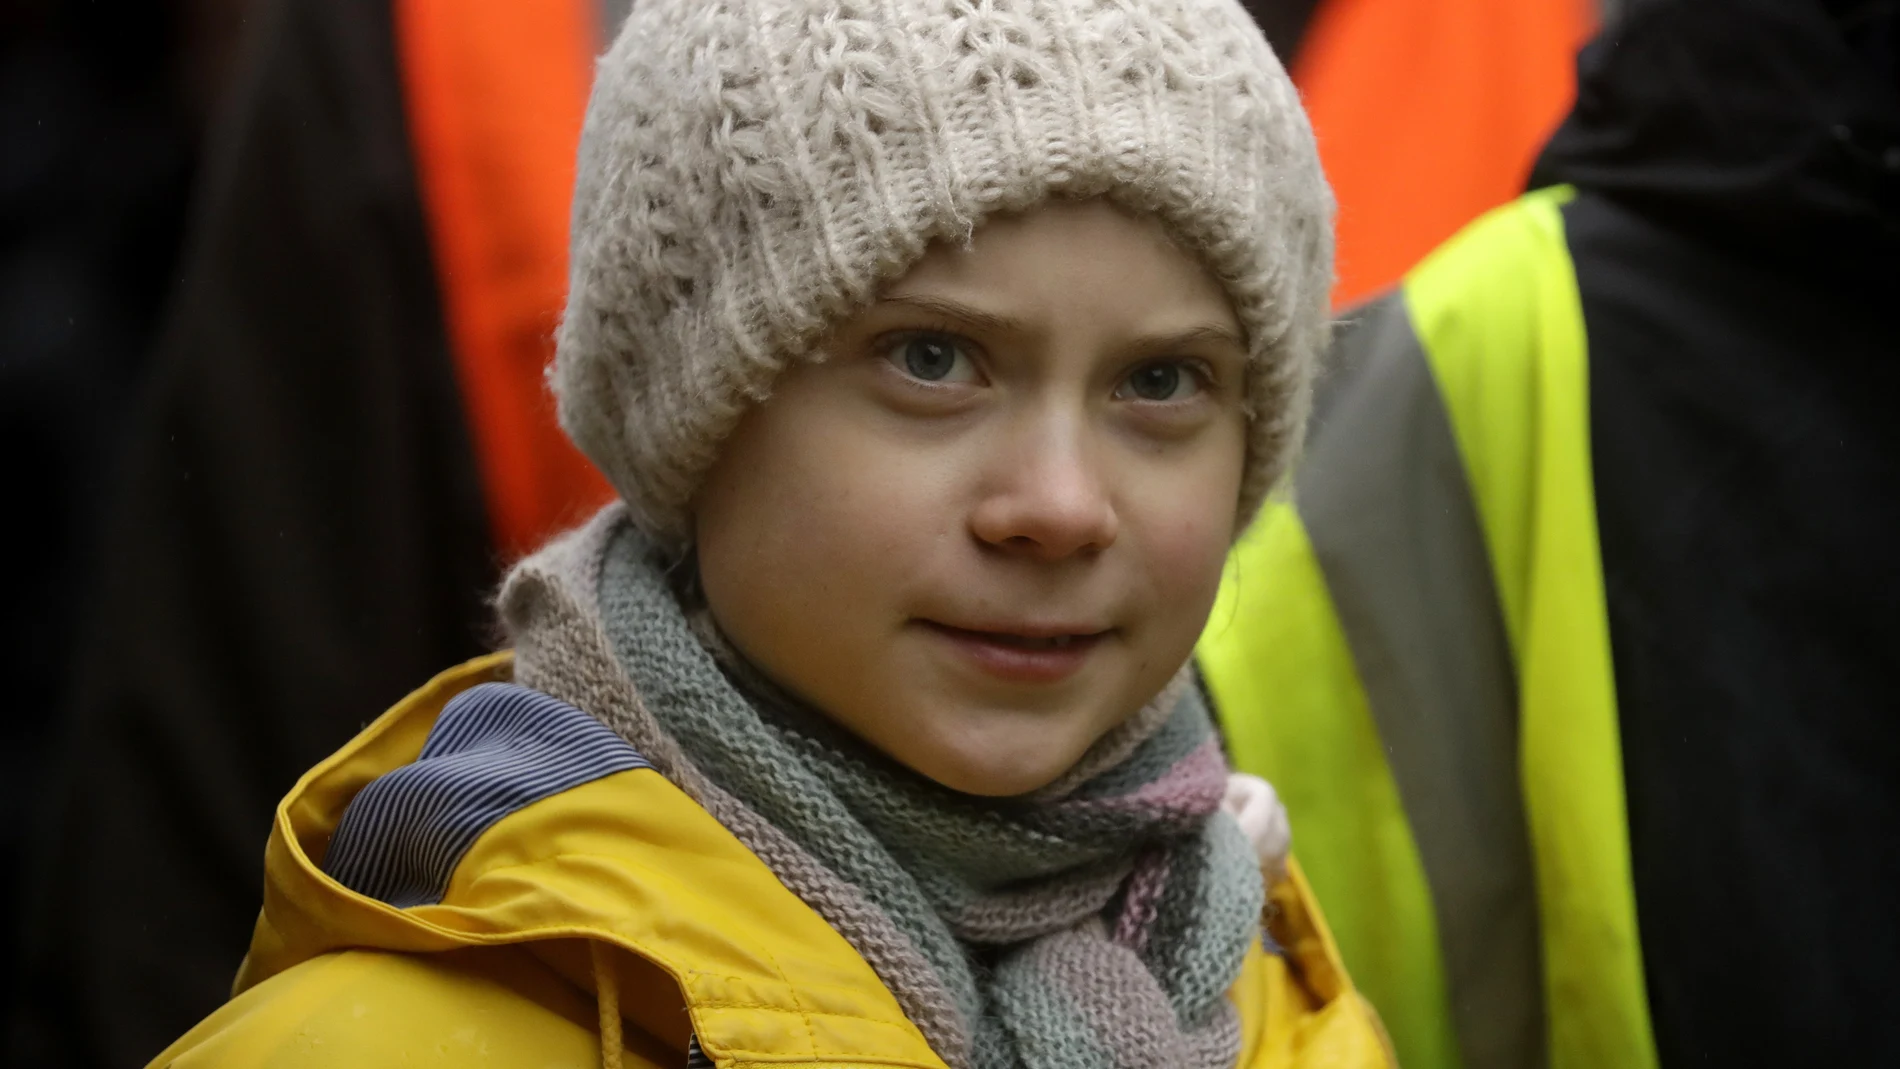 La activista Greta Thunberg